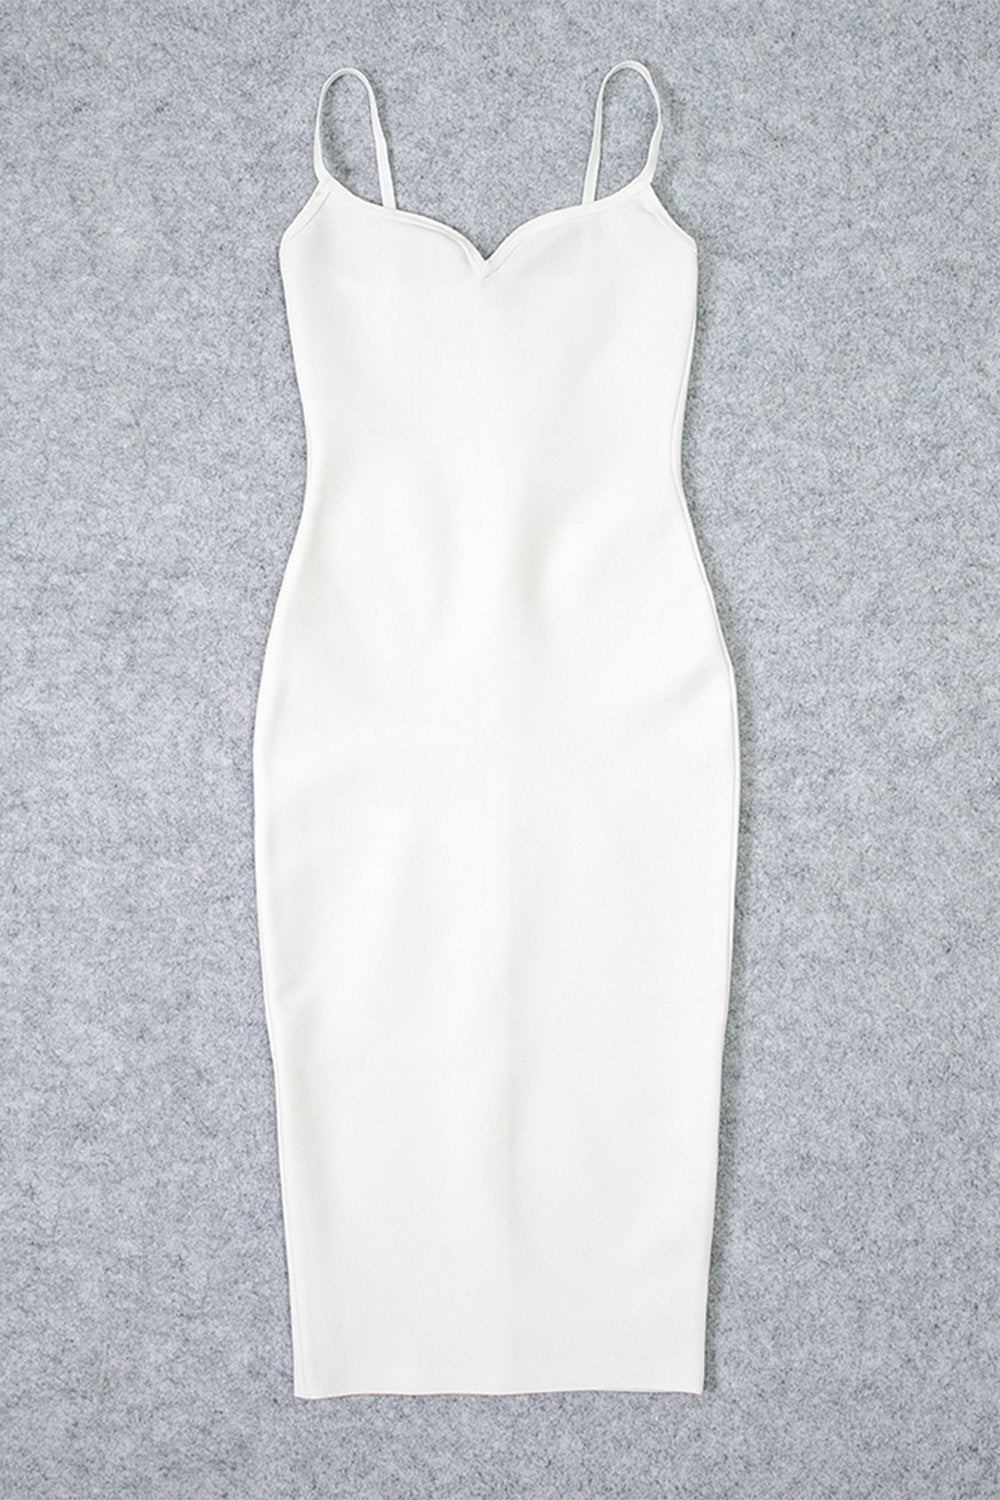 white bandage dress, white bodycon dress, white cocktail dress, bandage dress for women, midi bandage dress, sleeveless bandage dress, v neck bandage dress, event dress, party dress